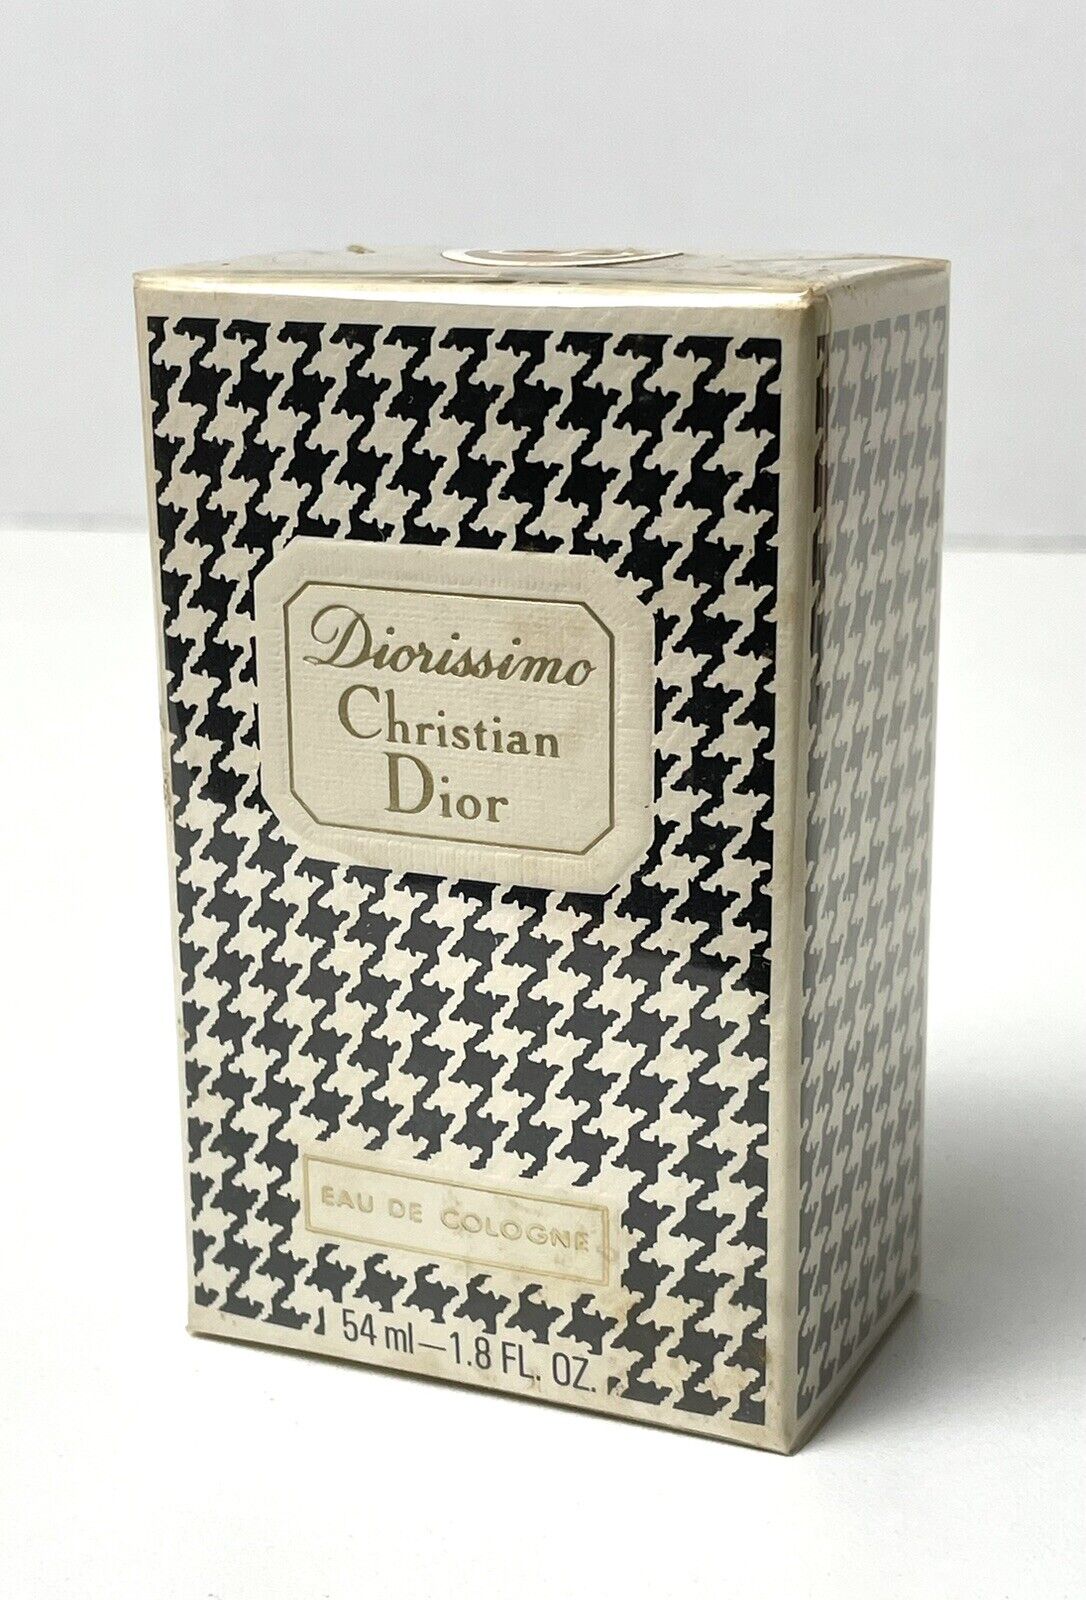 Vintage Christian Dior Diorissimo Eau De Cologne Parfum Splash 1.8oz NEW SEALED